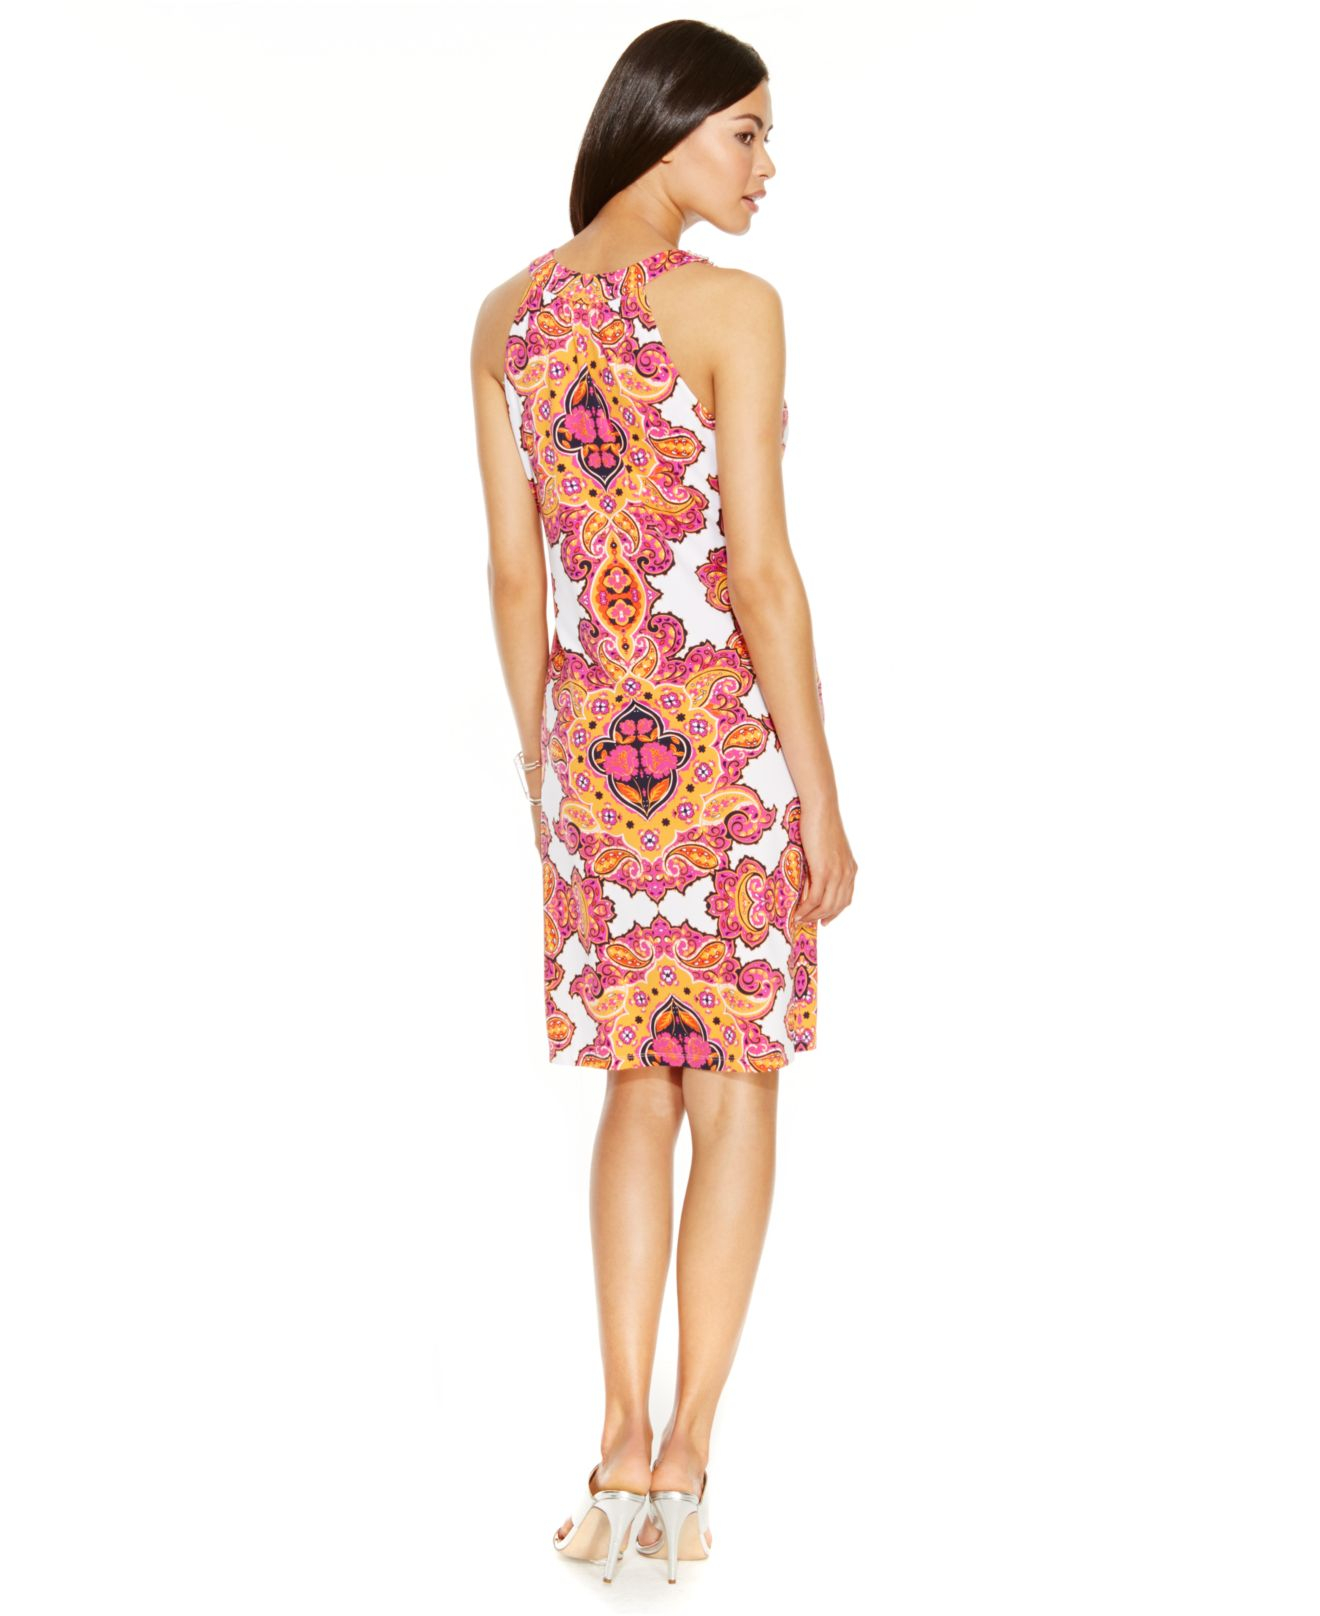 Lyst - Inc International Concepts Embellished Printed Halter Dress in Pink